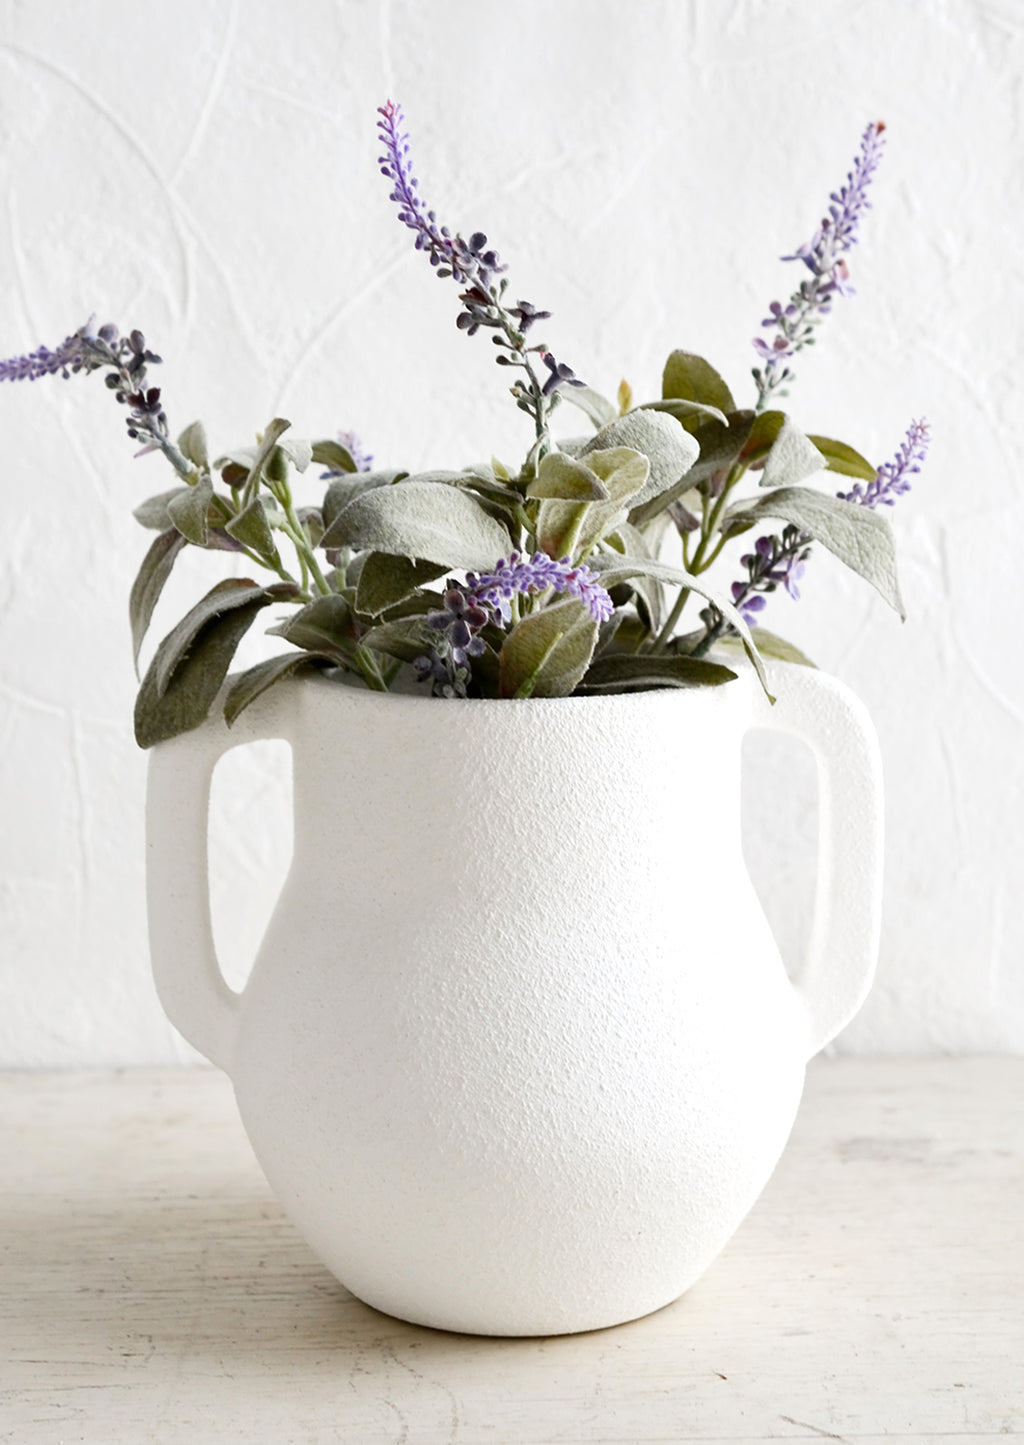 1: A matte white ceramic vase with lavender sprigs.